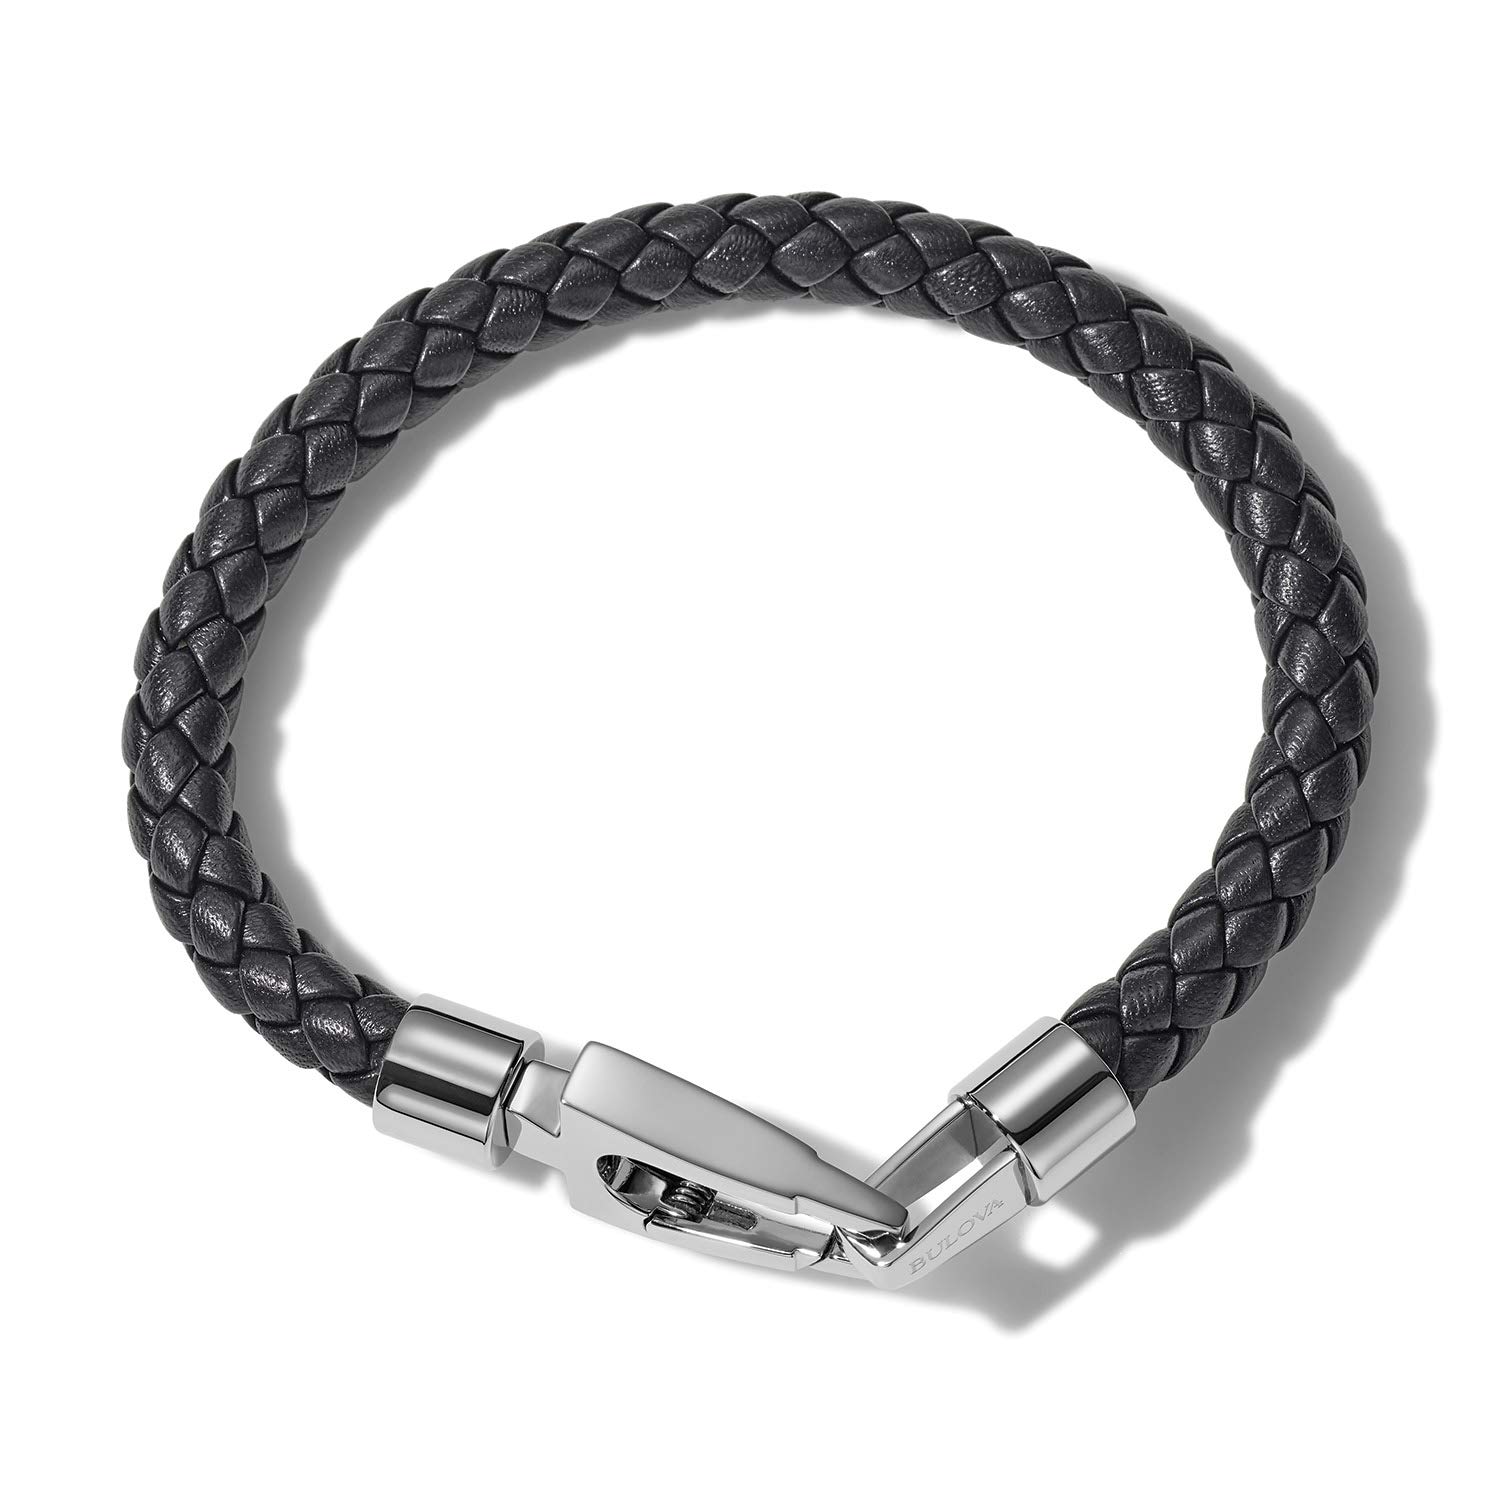 Bulova Jewelry Men's Marine Star Braided Leather Bracelet with Tuning Fork Clasp